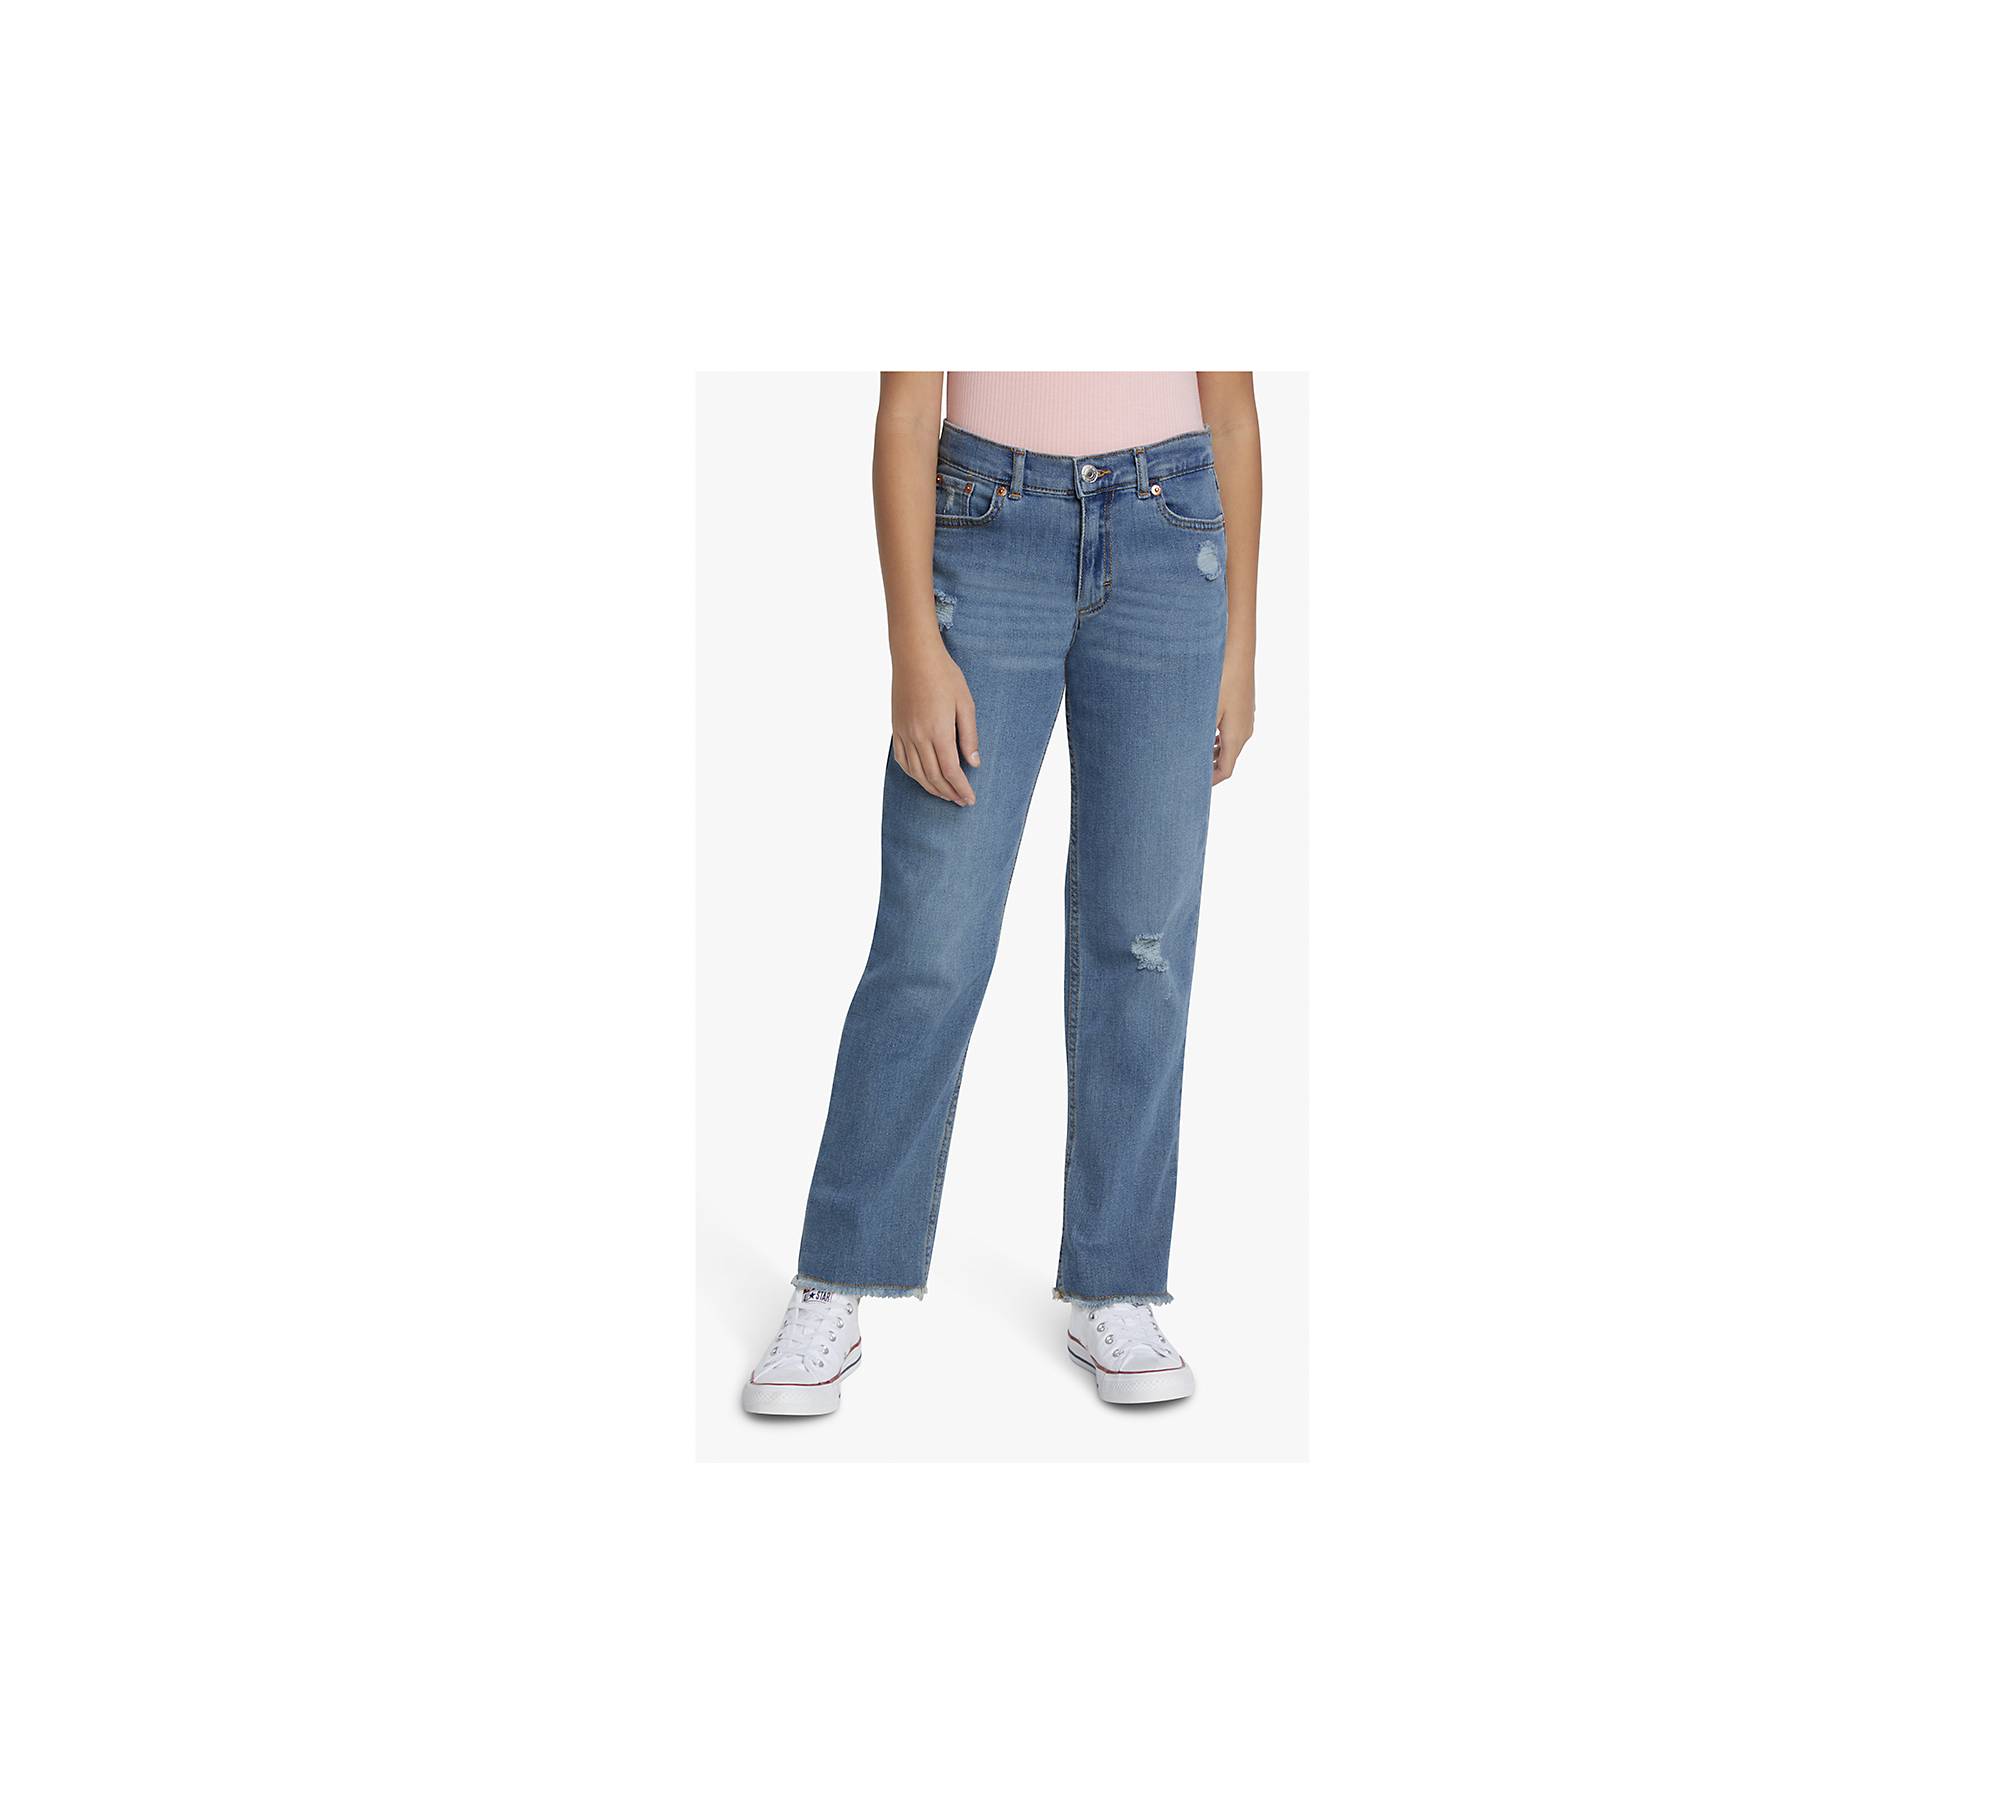 Levi's® Mini Mom Big Girls Jeans 7-16 - Dark Wash